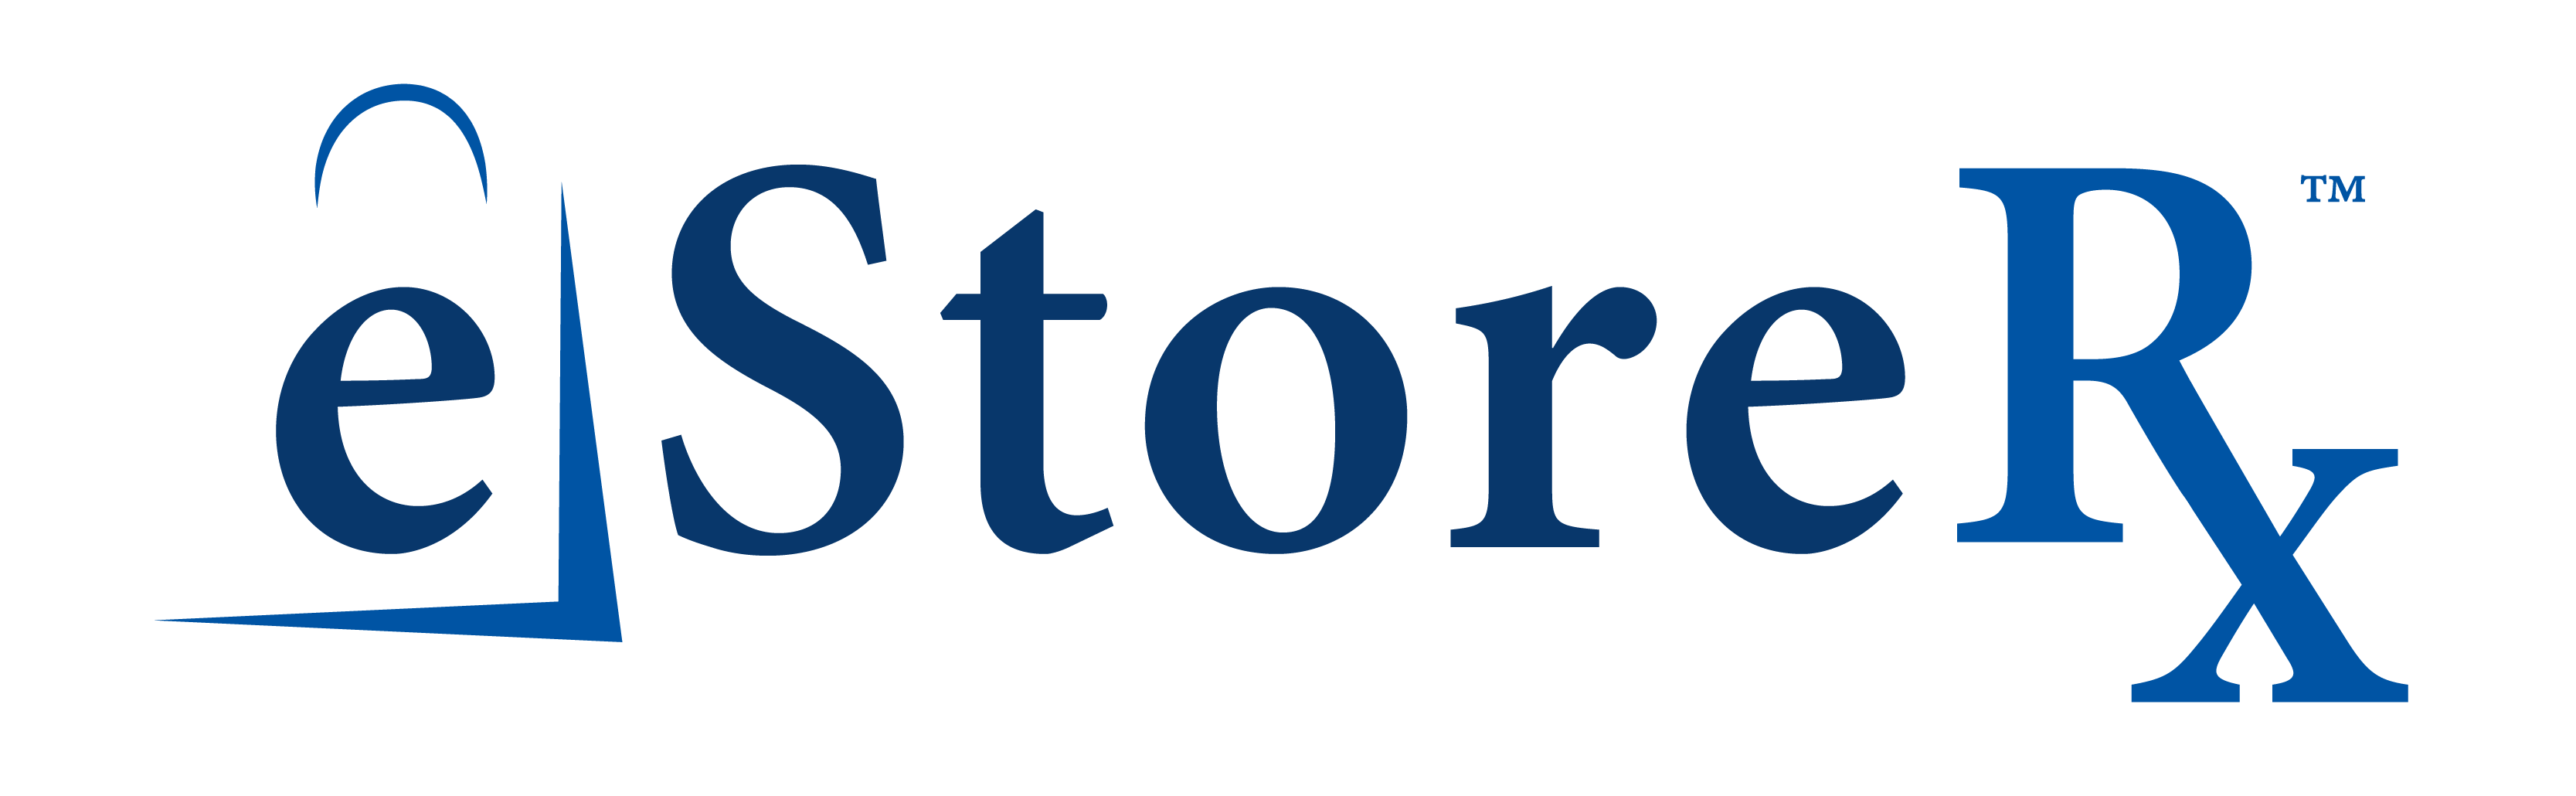 eStoreRx_Logo-01